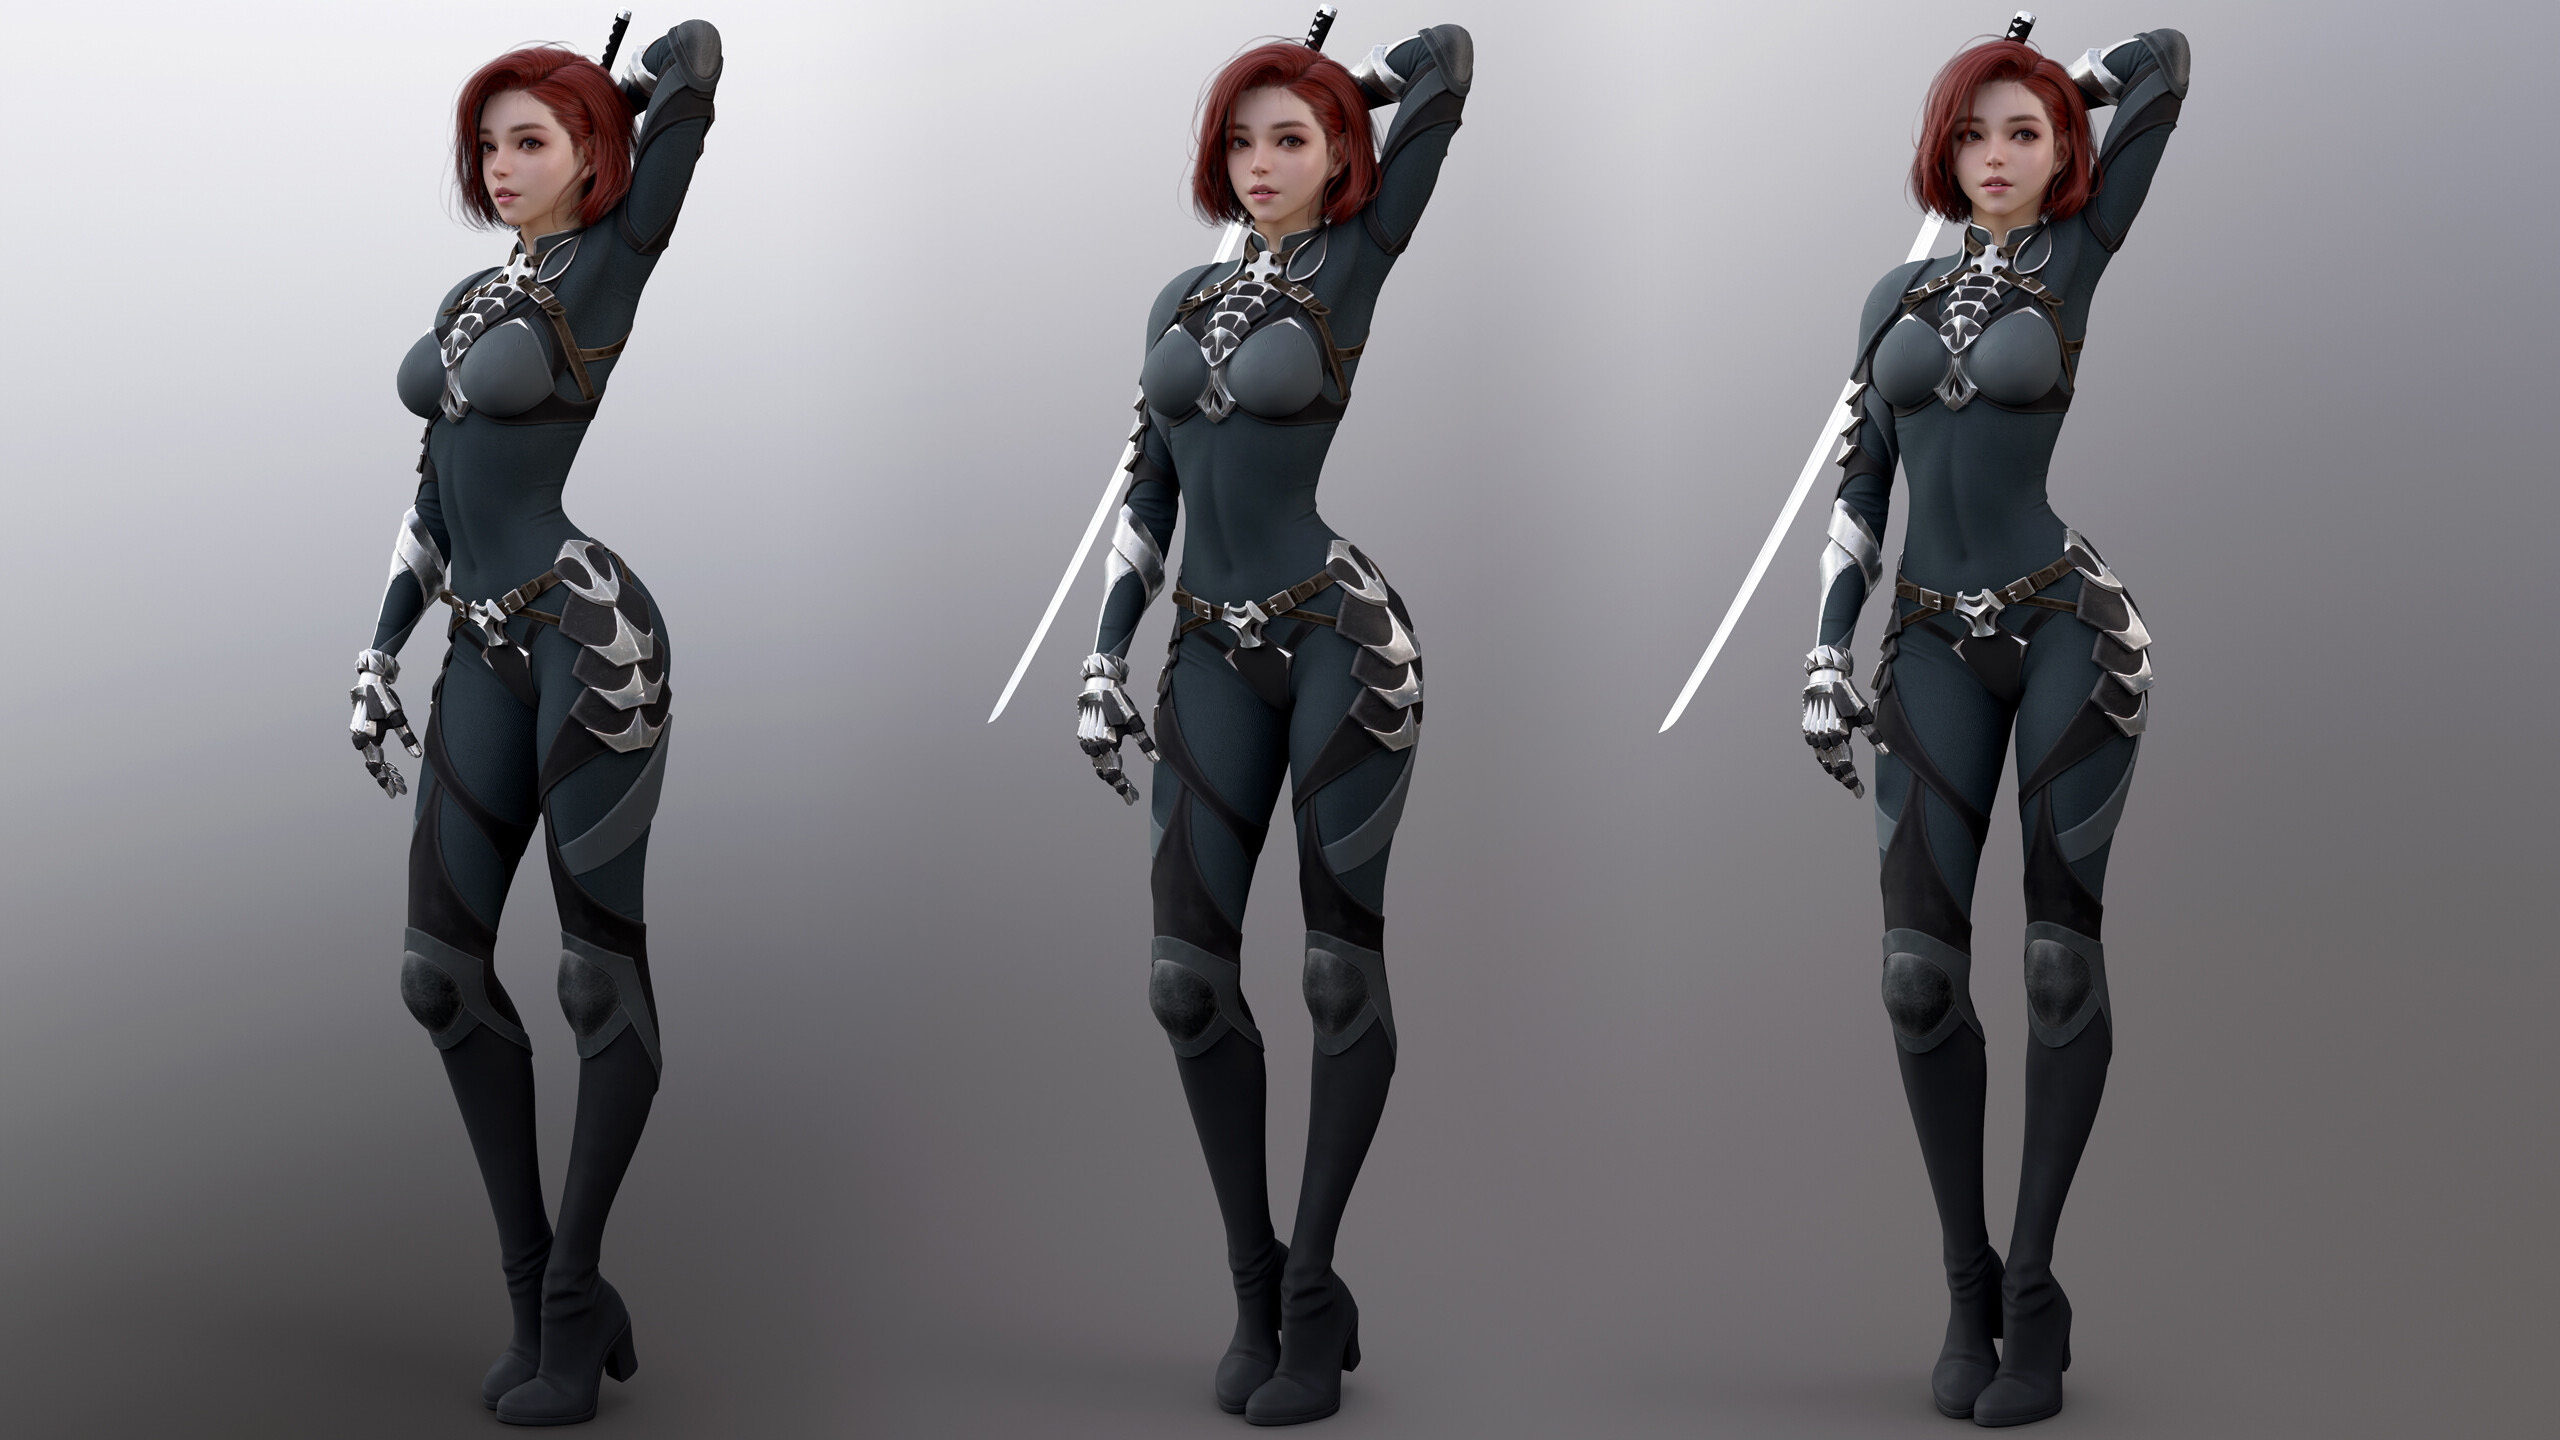 General 2560x1440 ArtStation katana armor Shin JeongHo bodysuit redhead women